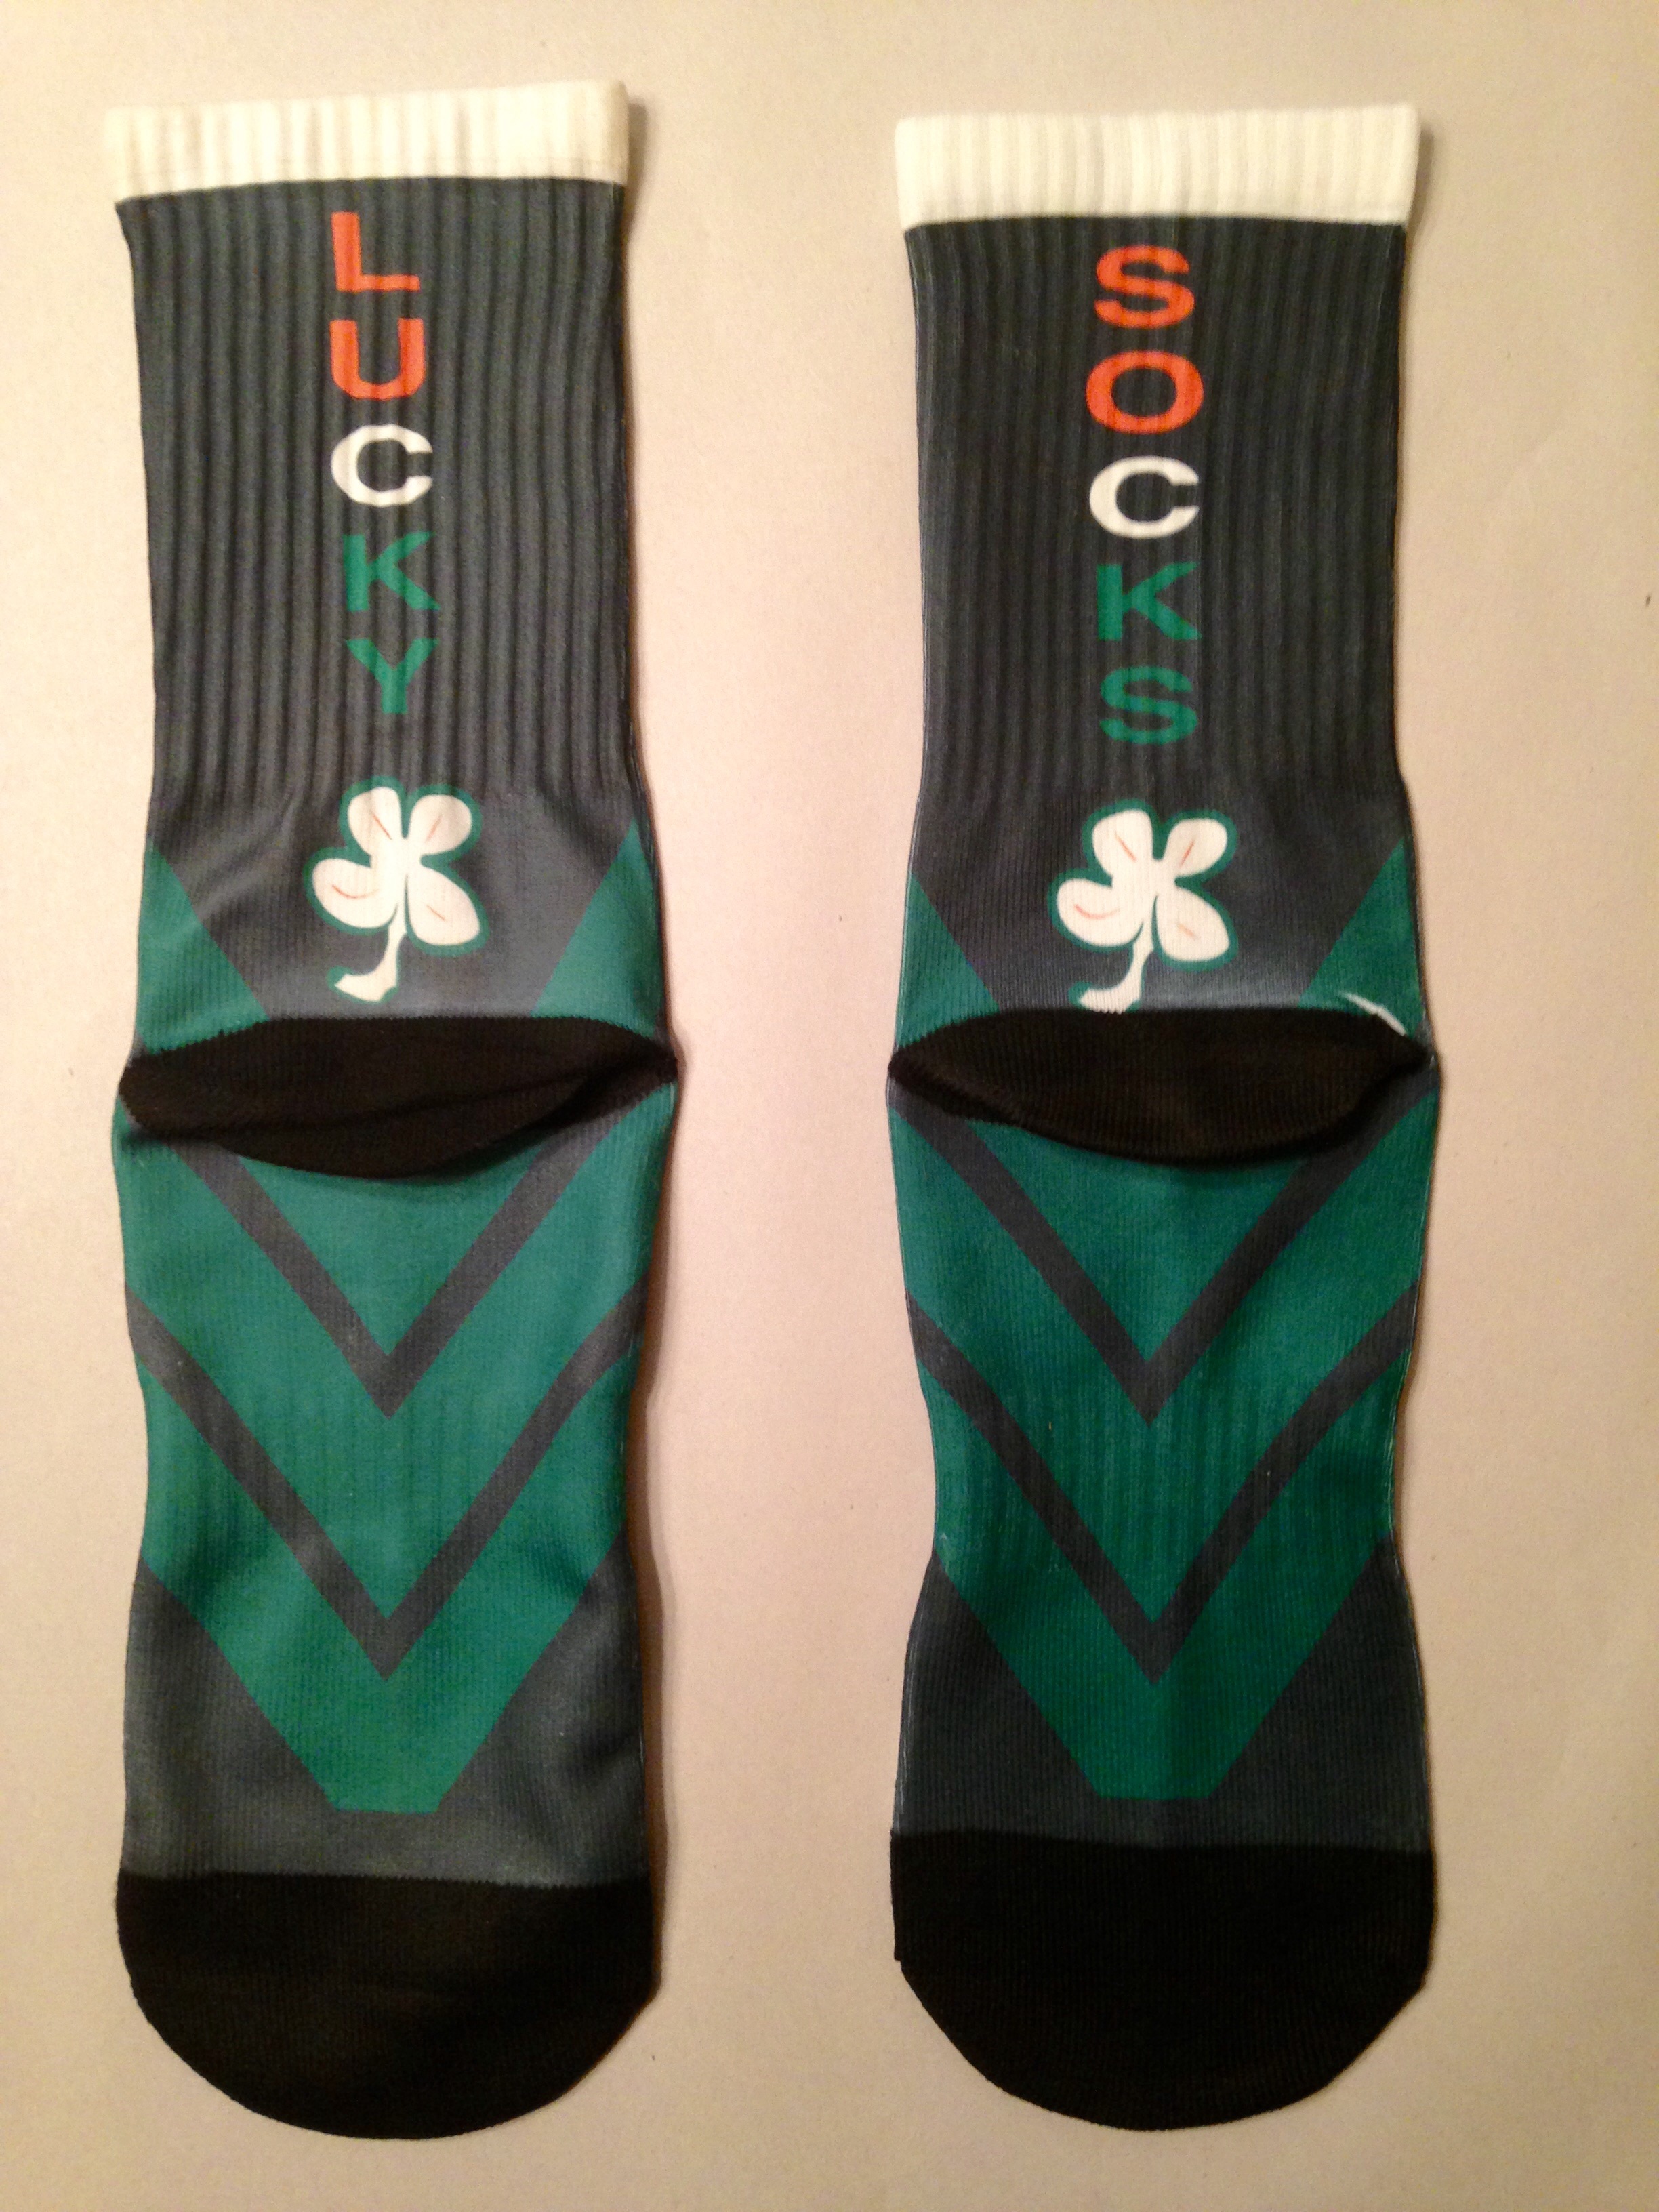 Lucky Socks USA made with sublimation printing